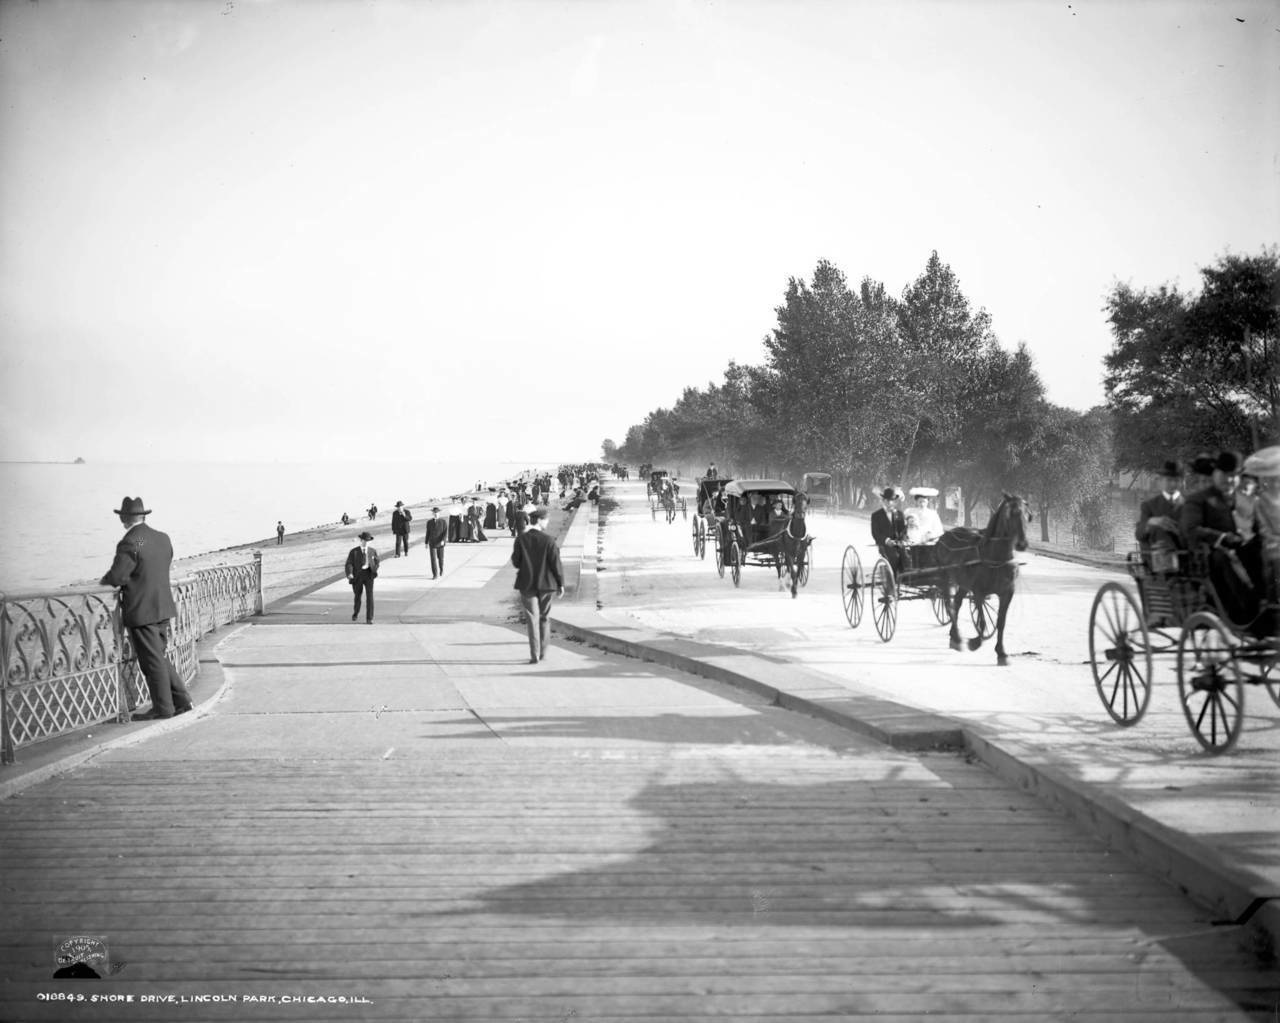 Summer stroll in 1905 in Chicago, Illinois. 